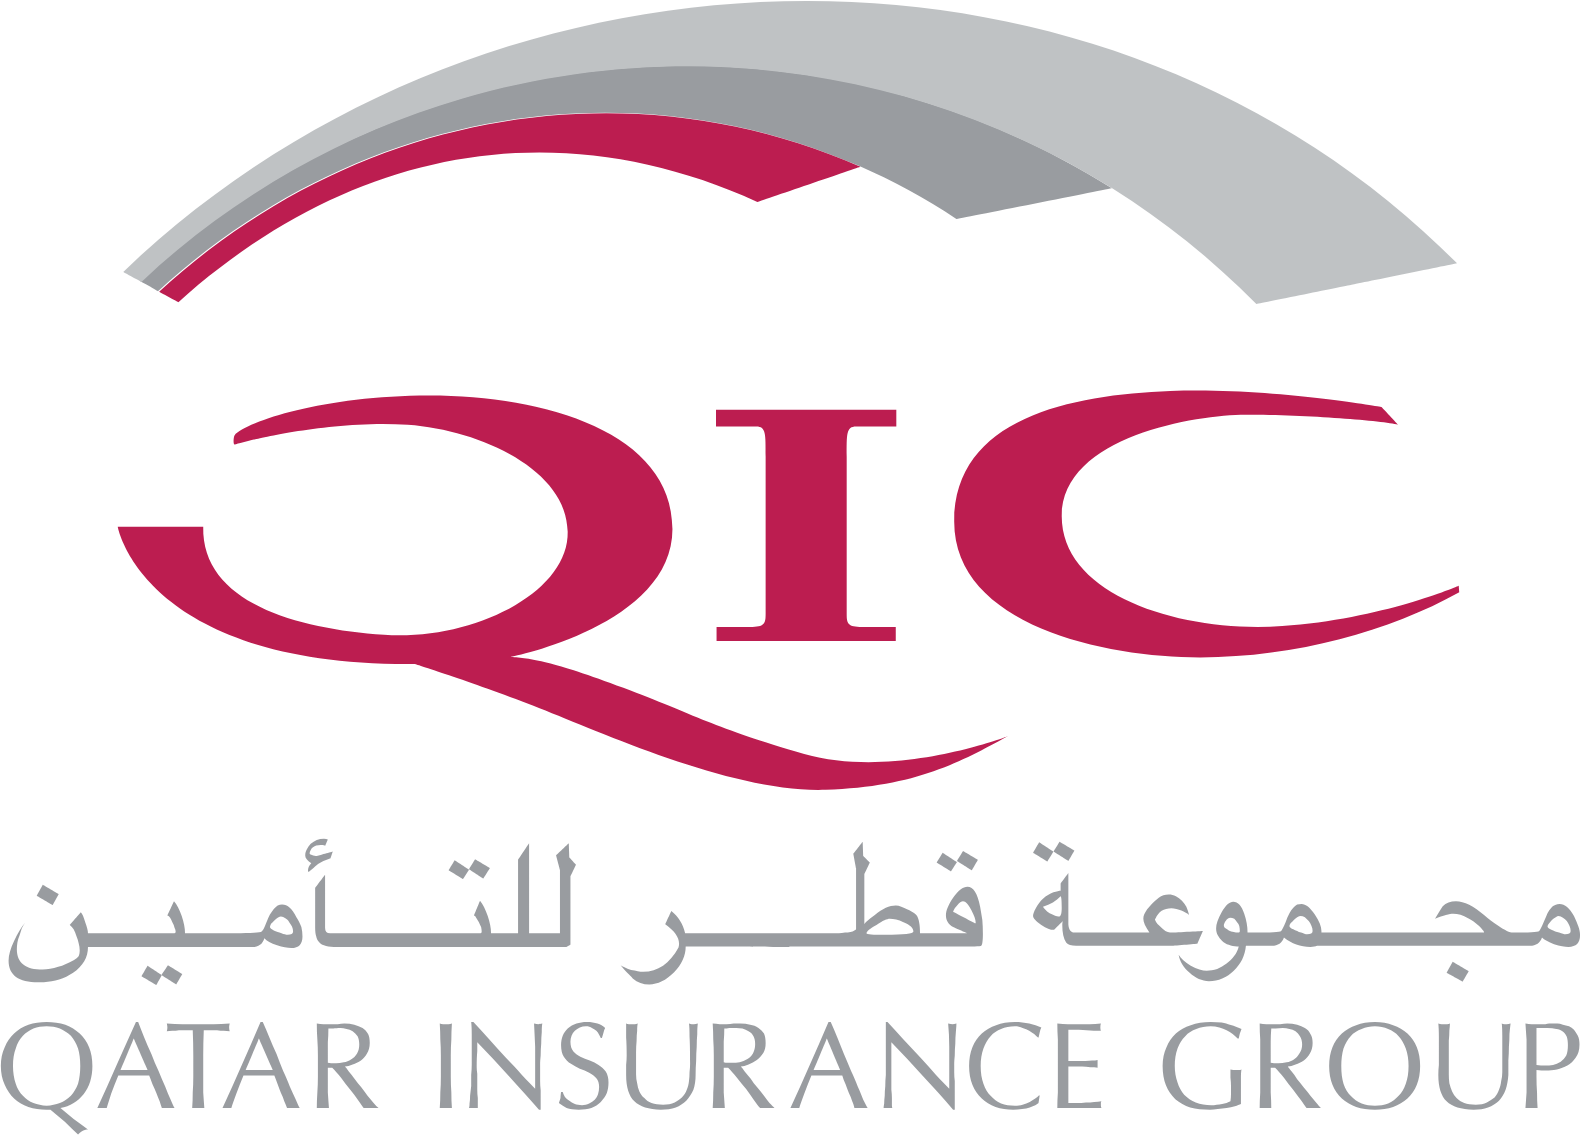 Qatar Insurance Company logo large (transparent PNG)